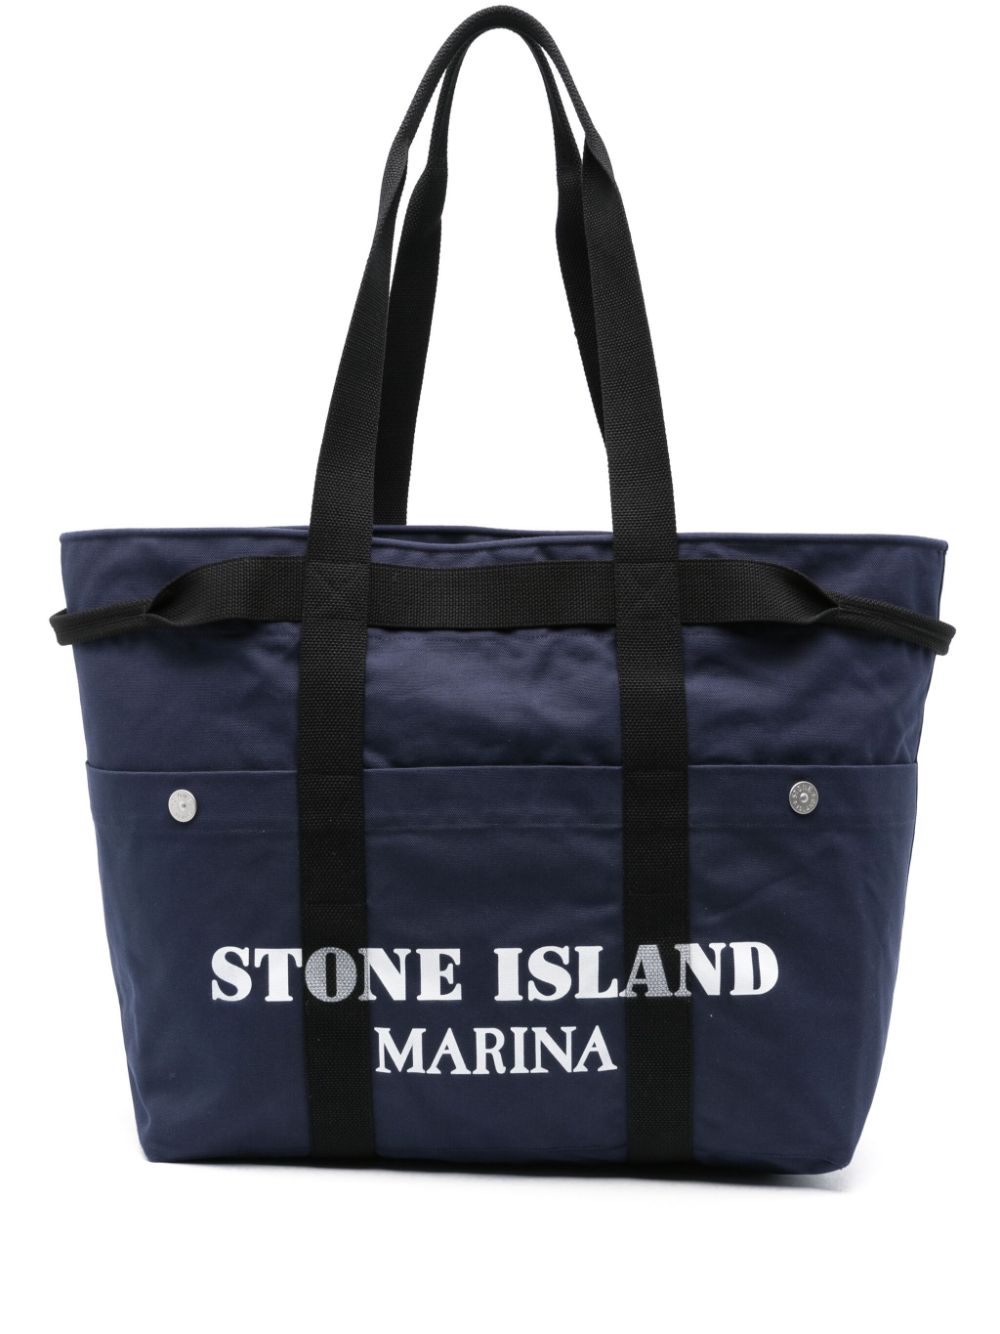 Stone Island Marina tote bag - Blue von Stone Island